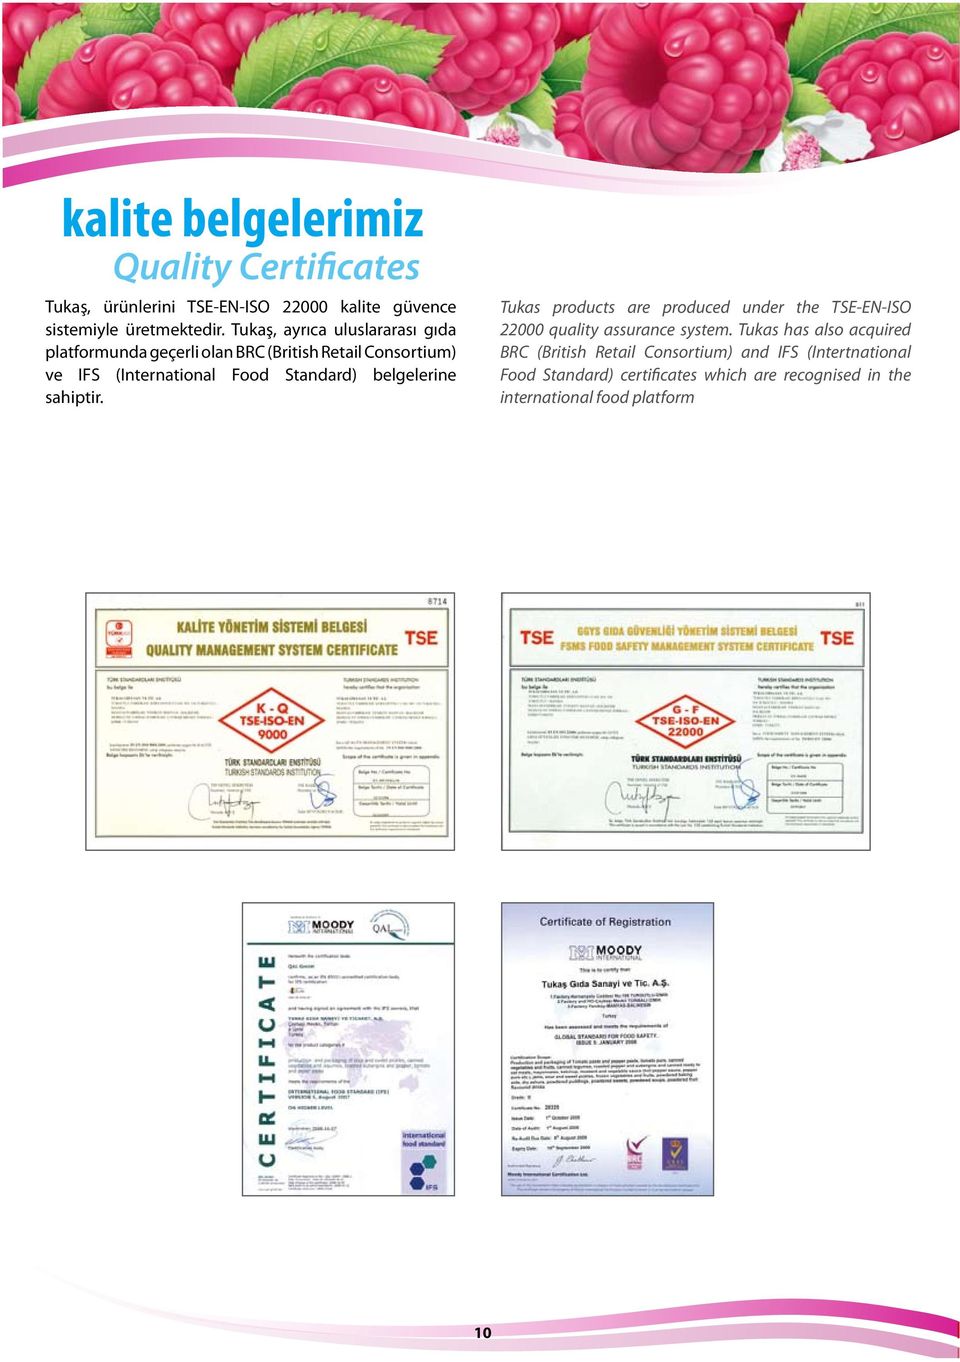 belgelerine sahiptir. Tukas products are produced under the TSE-EN-ISO 22000 quality assurance system.